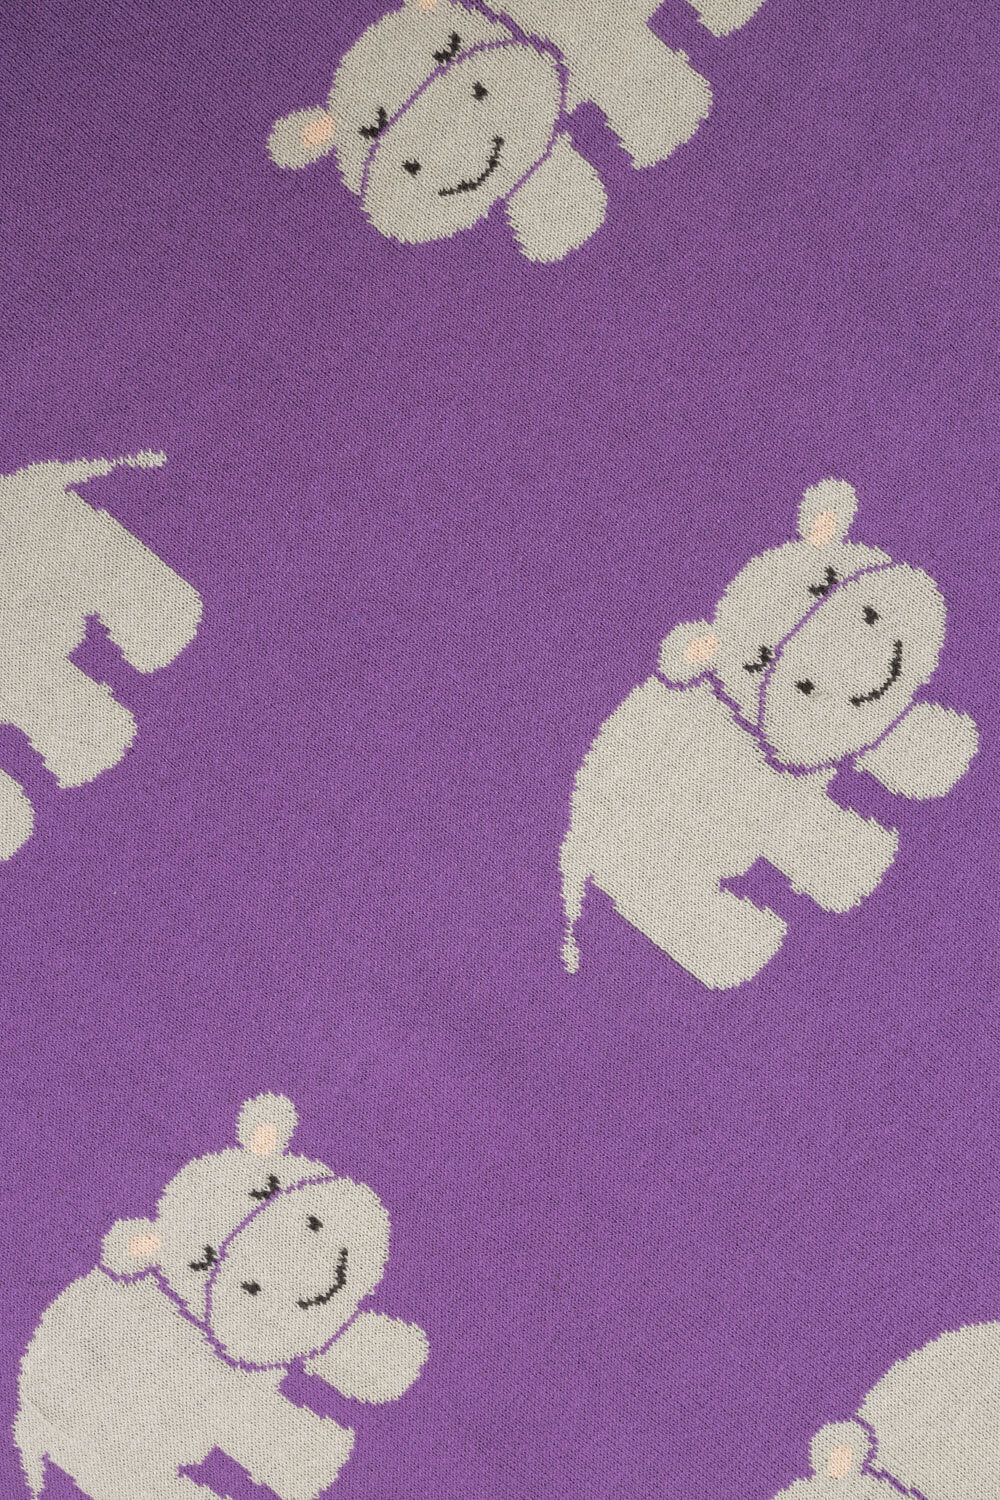 Baby Blanket in Purple Hippo